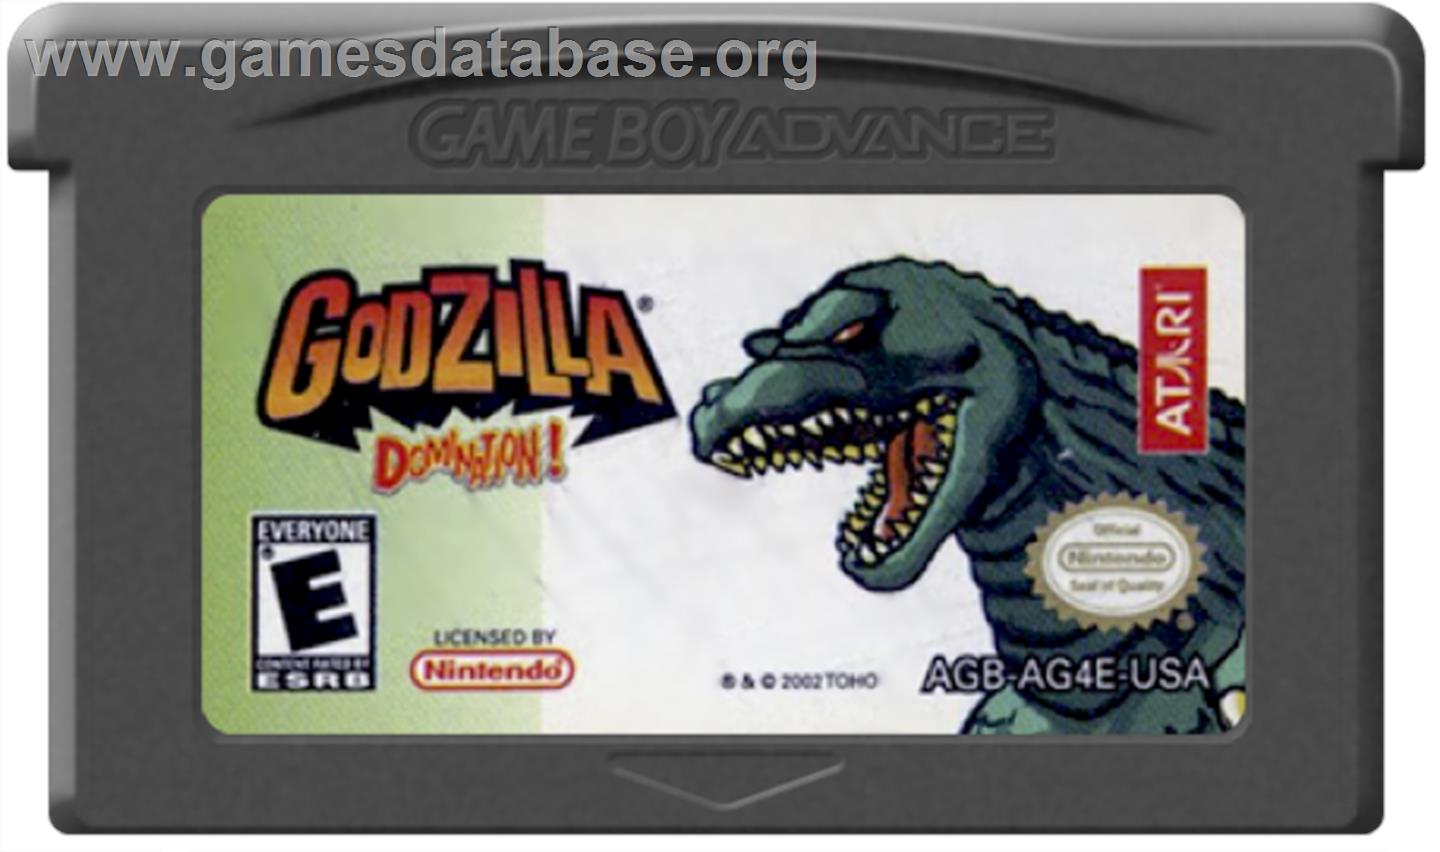 Godzilla: Domination - Nintendo Game Boy Advance - Artwork - Cartridge